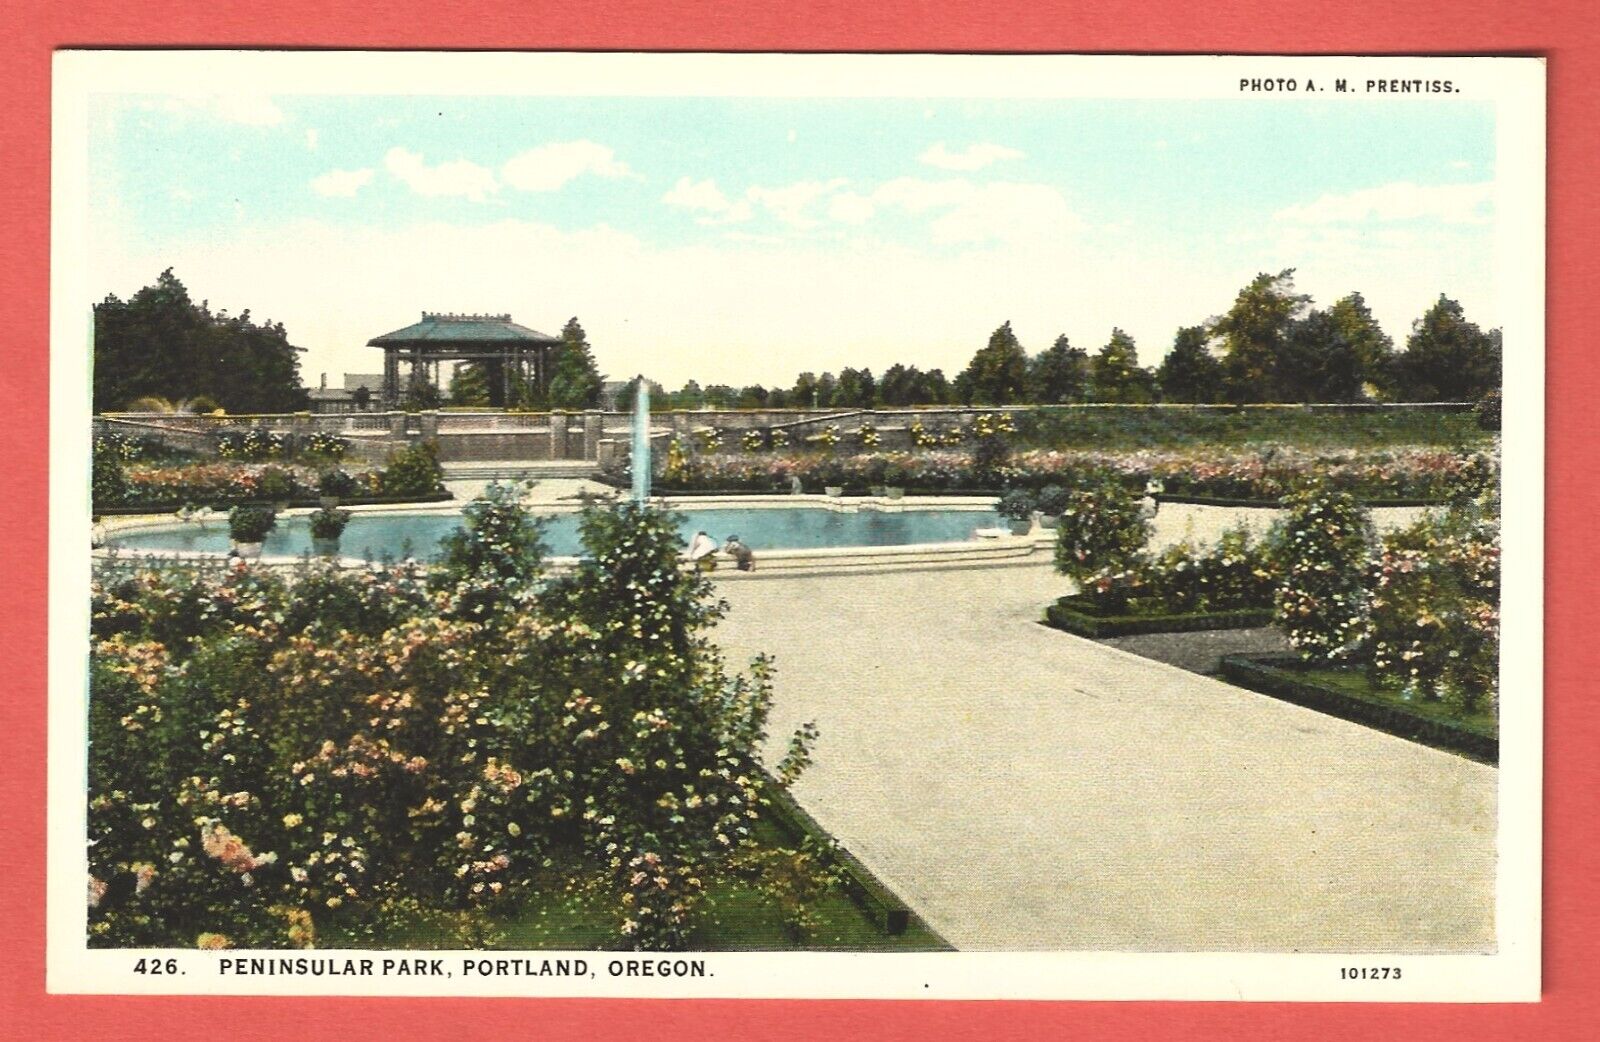 PENINSULAR PARK, PORTLAND, OREGON - 1924 Postcard – PRENTISS PHOTO